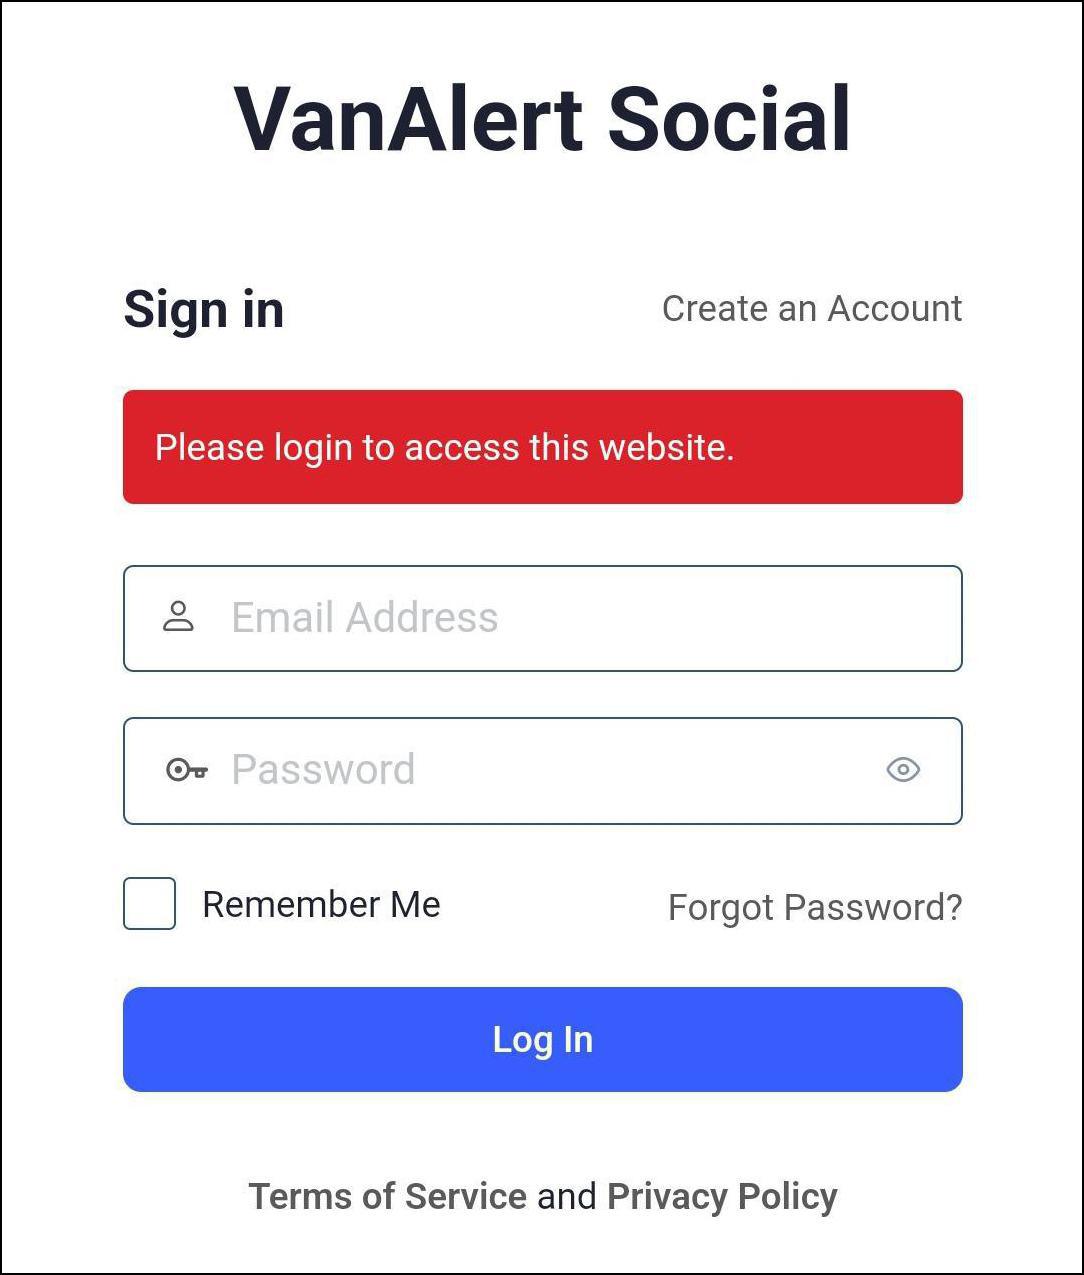 Van Alert Social Requires Registration